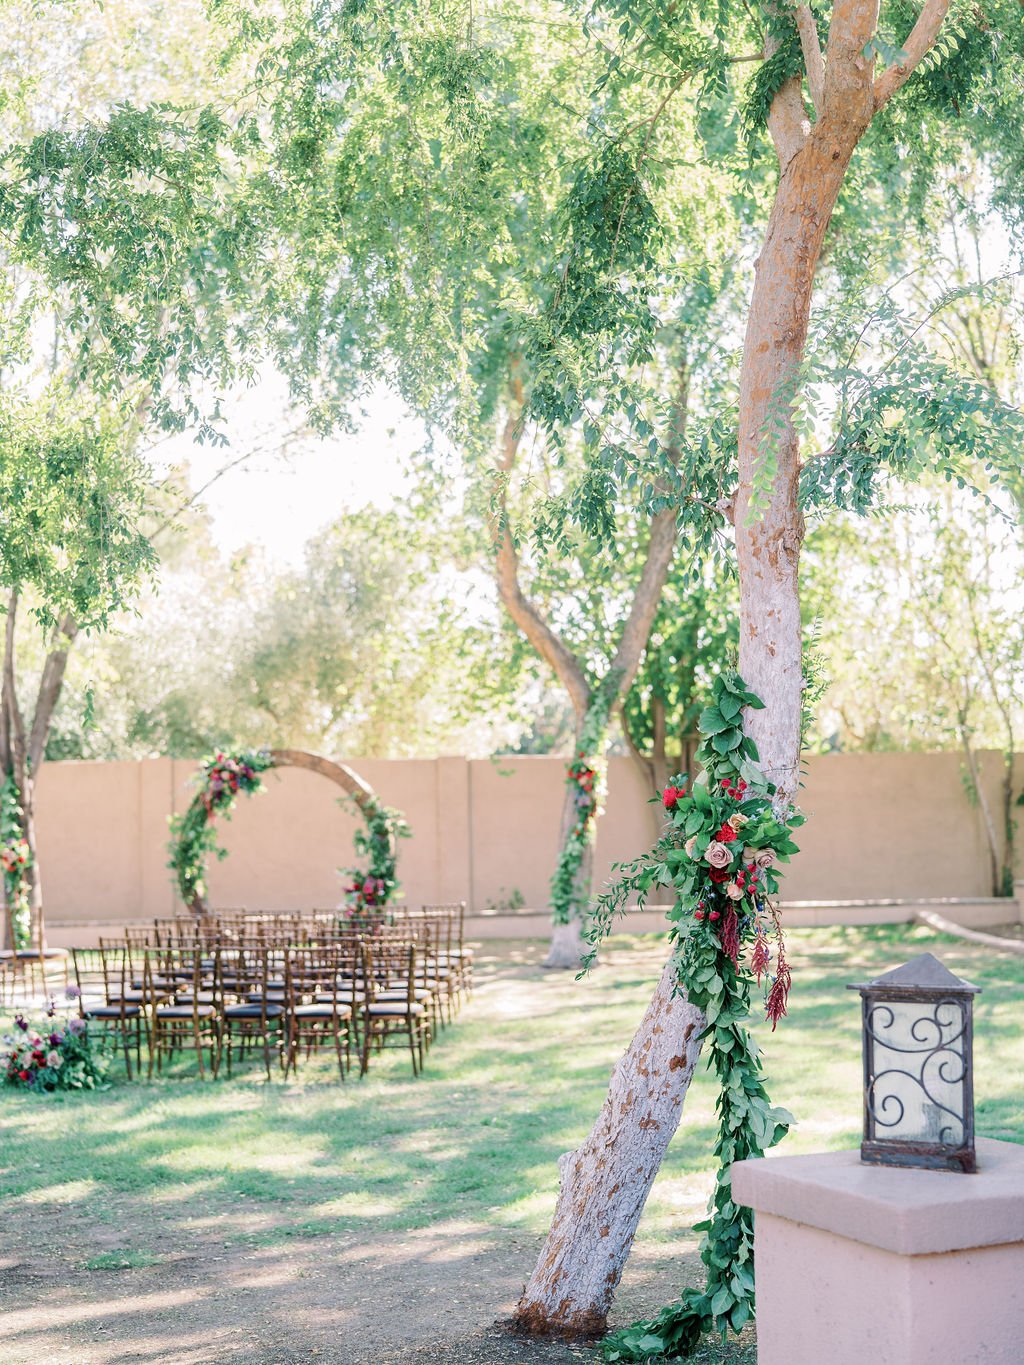 Dreamy Backyard Wedding with Moody Undertone - Konsider It Done - Arizona AZ Wedding Event Planner, Designer, Coordinator in Scottsdale, Phoenix, Paradise Valley,  Tucson, Sedona, Destination, California, Lake Tahoe 1.jpg